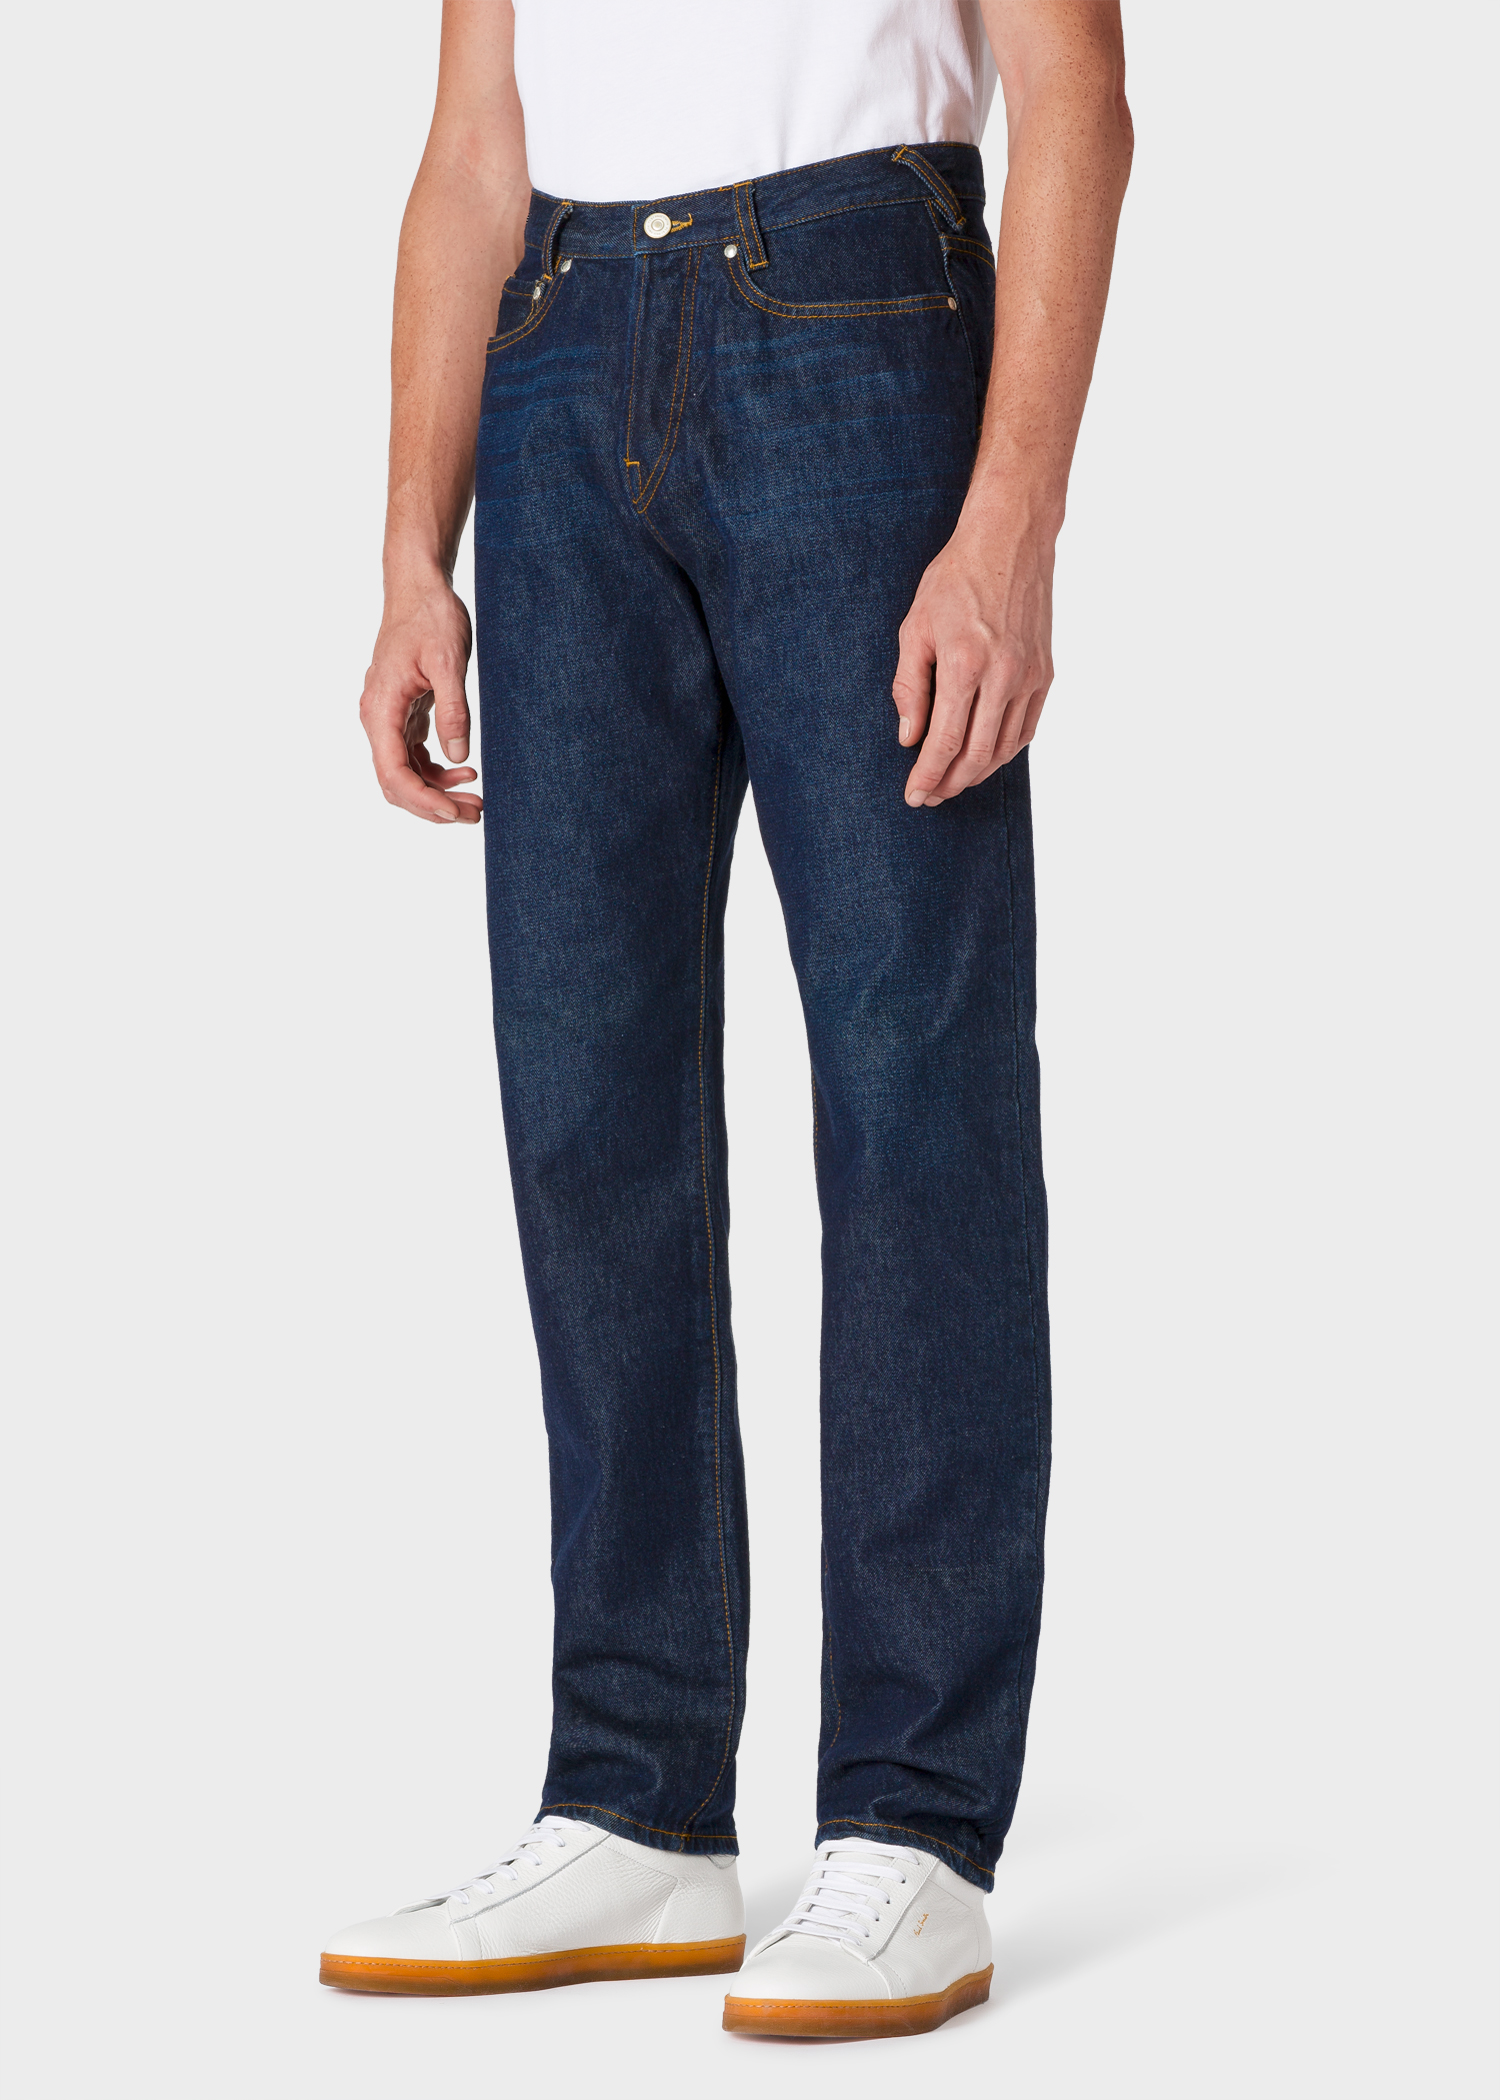 Men's Classic-Fit 'Organic Salt & Pepper' Dark Wash Jeans